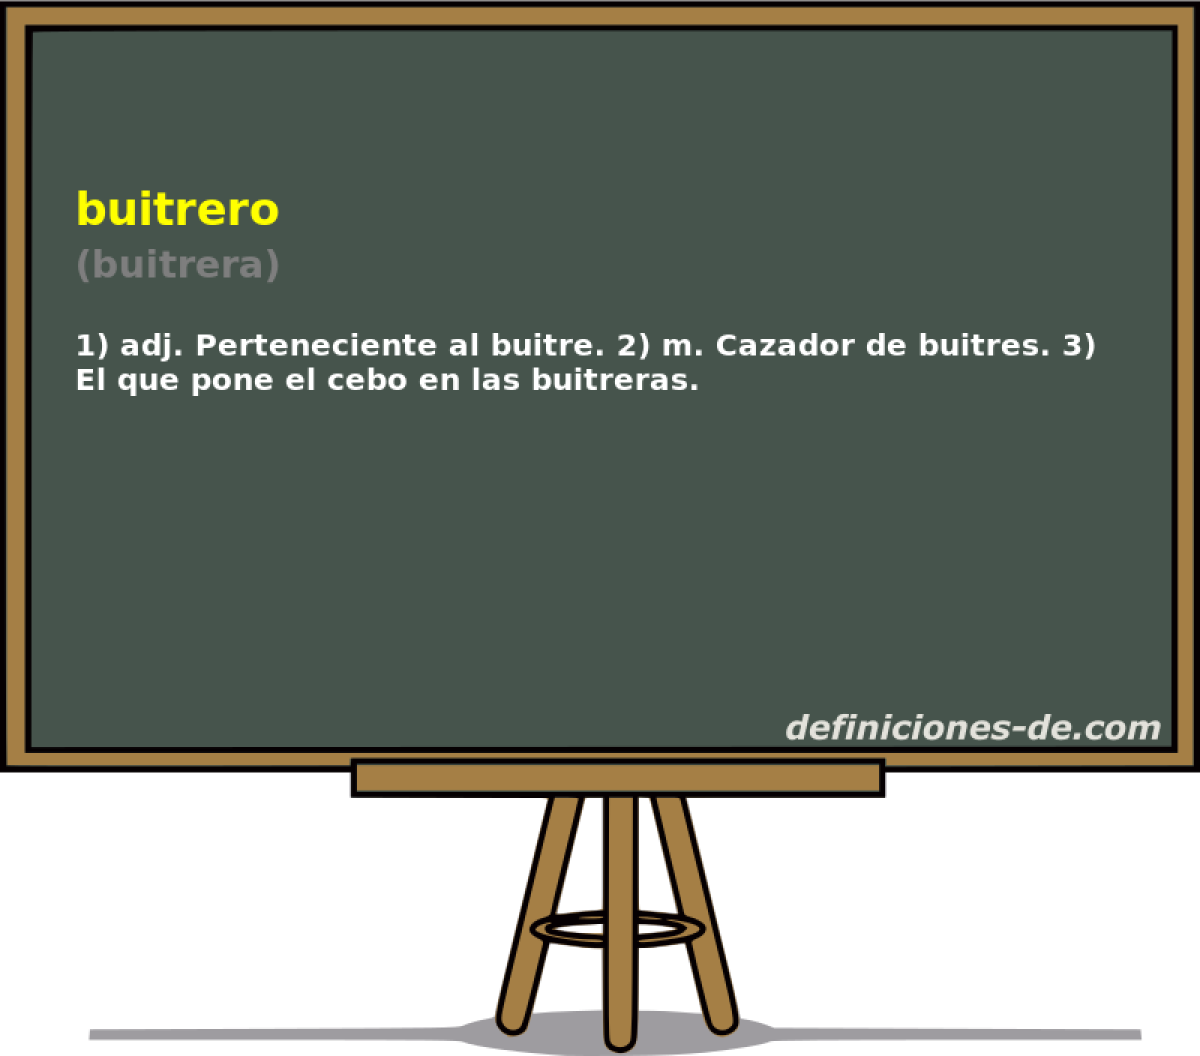 buitrero (buitrera)